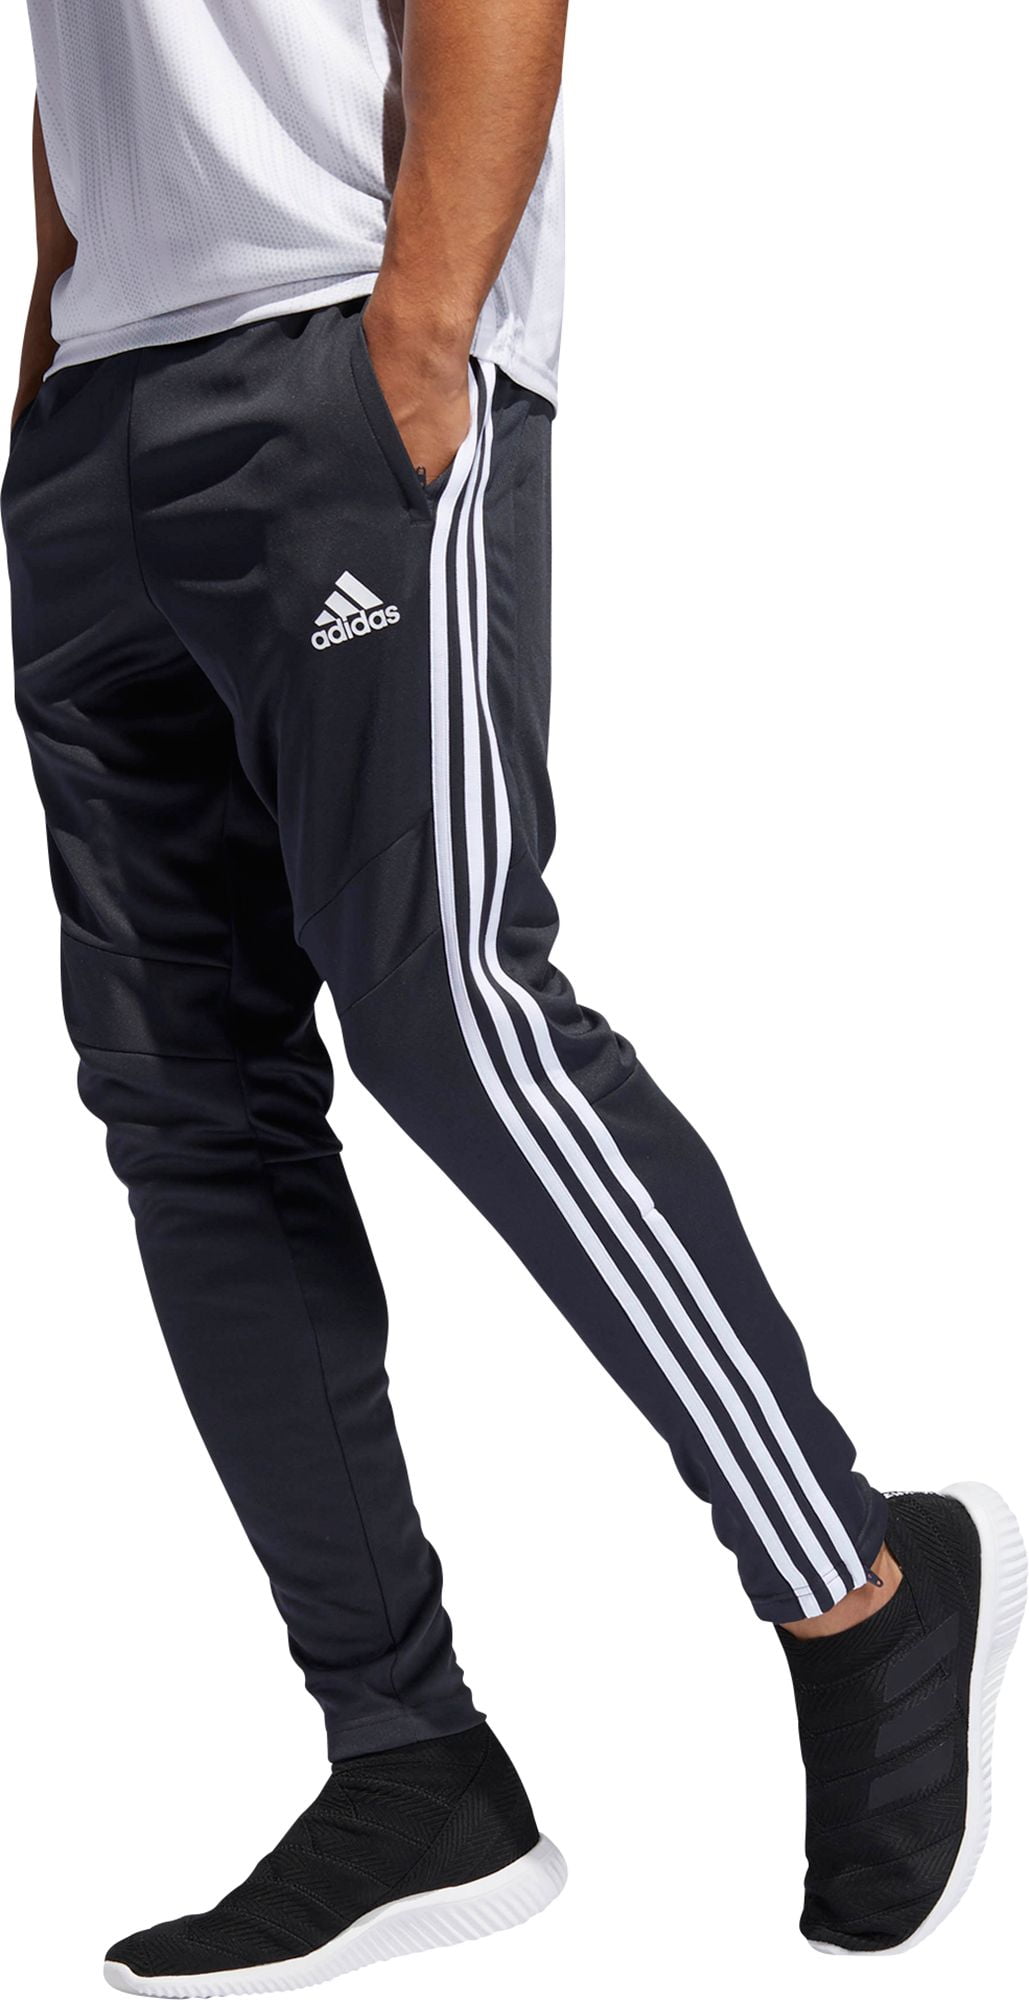 adidas men's pants with zipper pockets